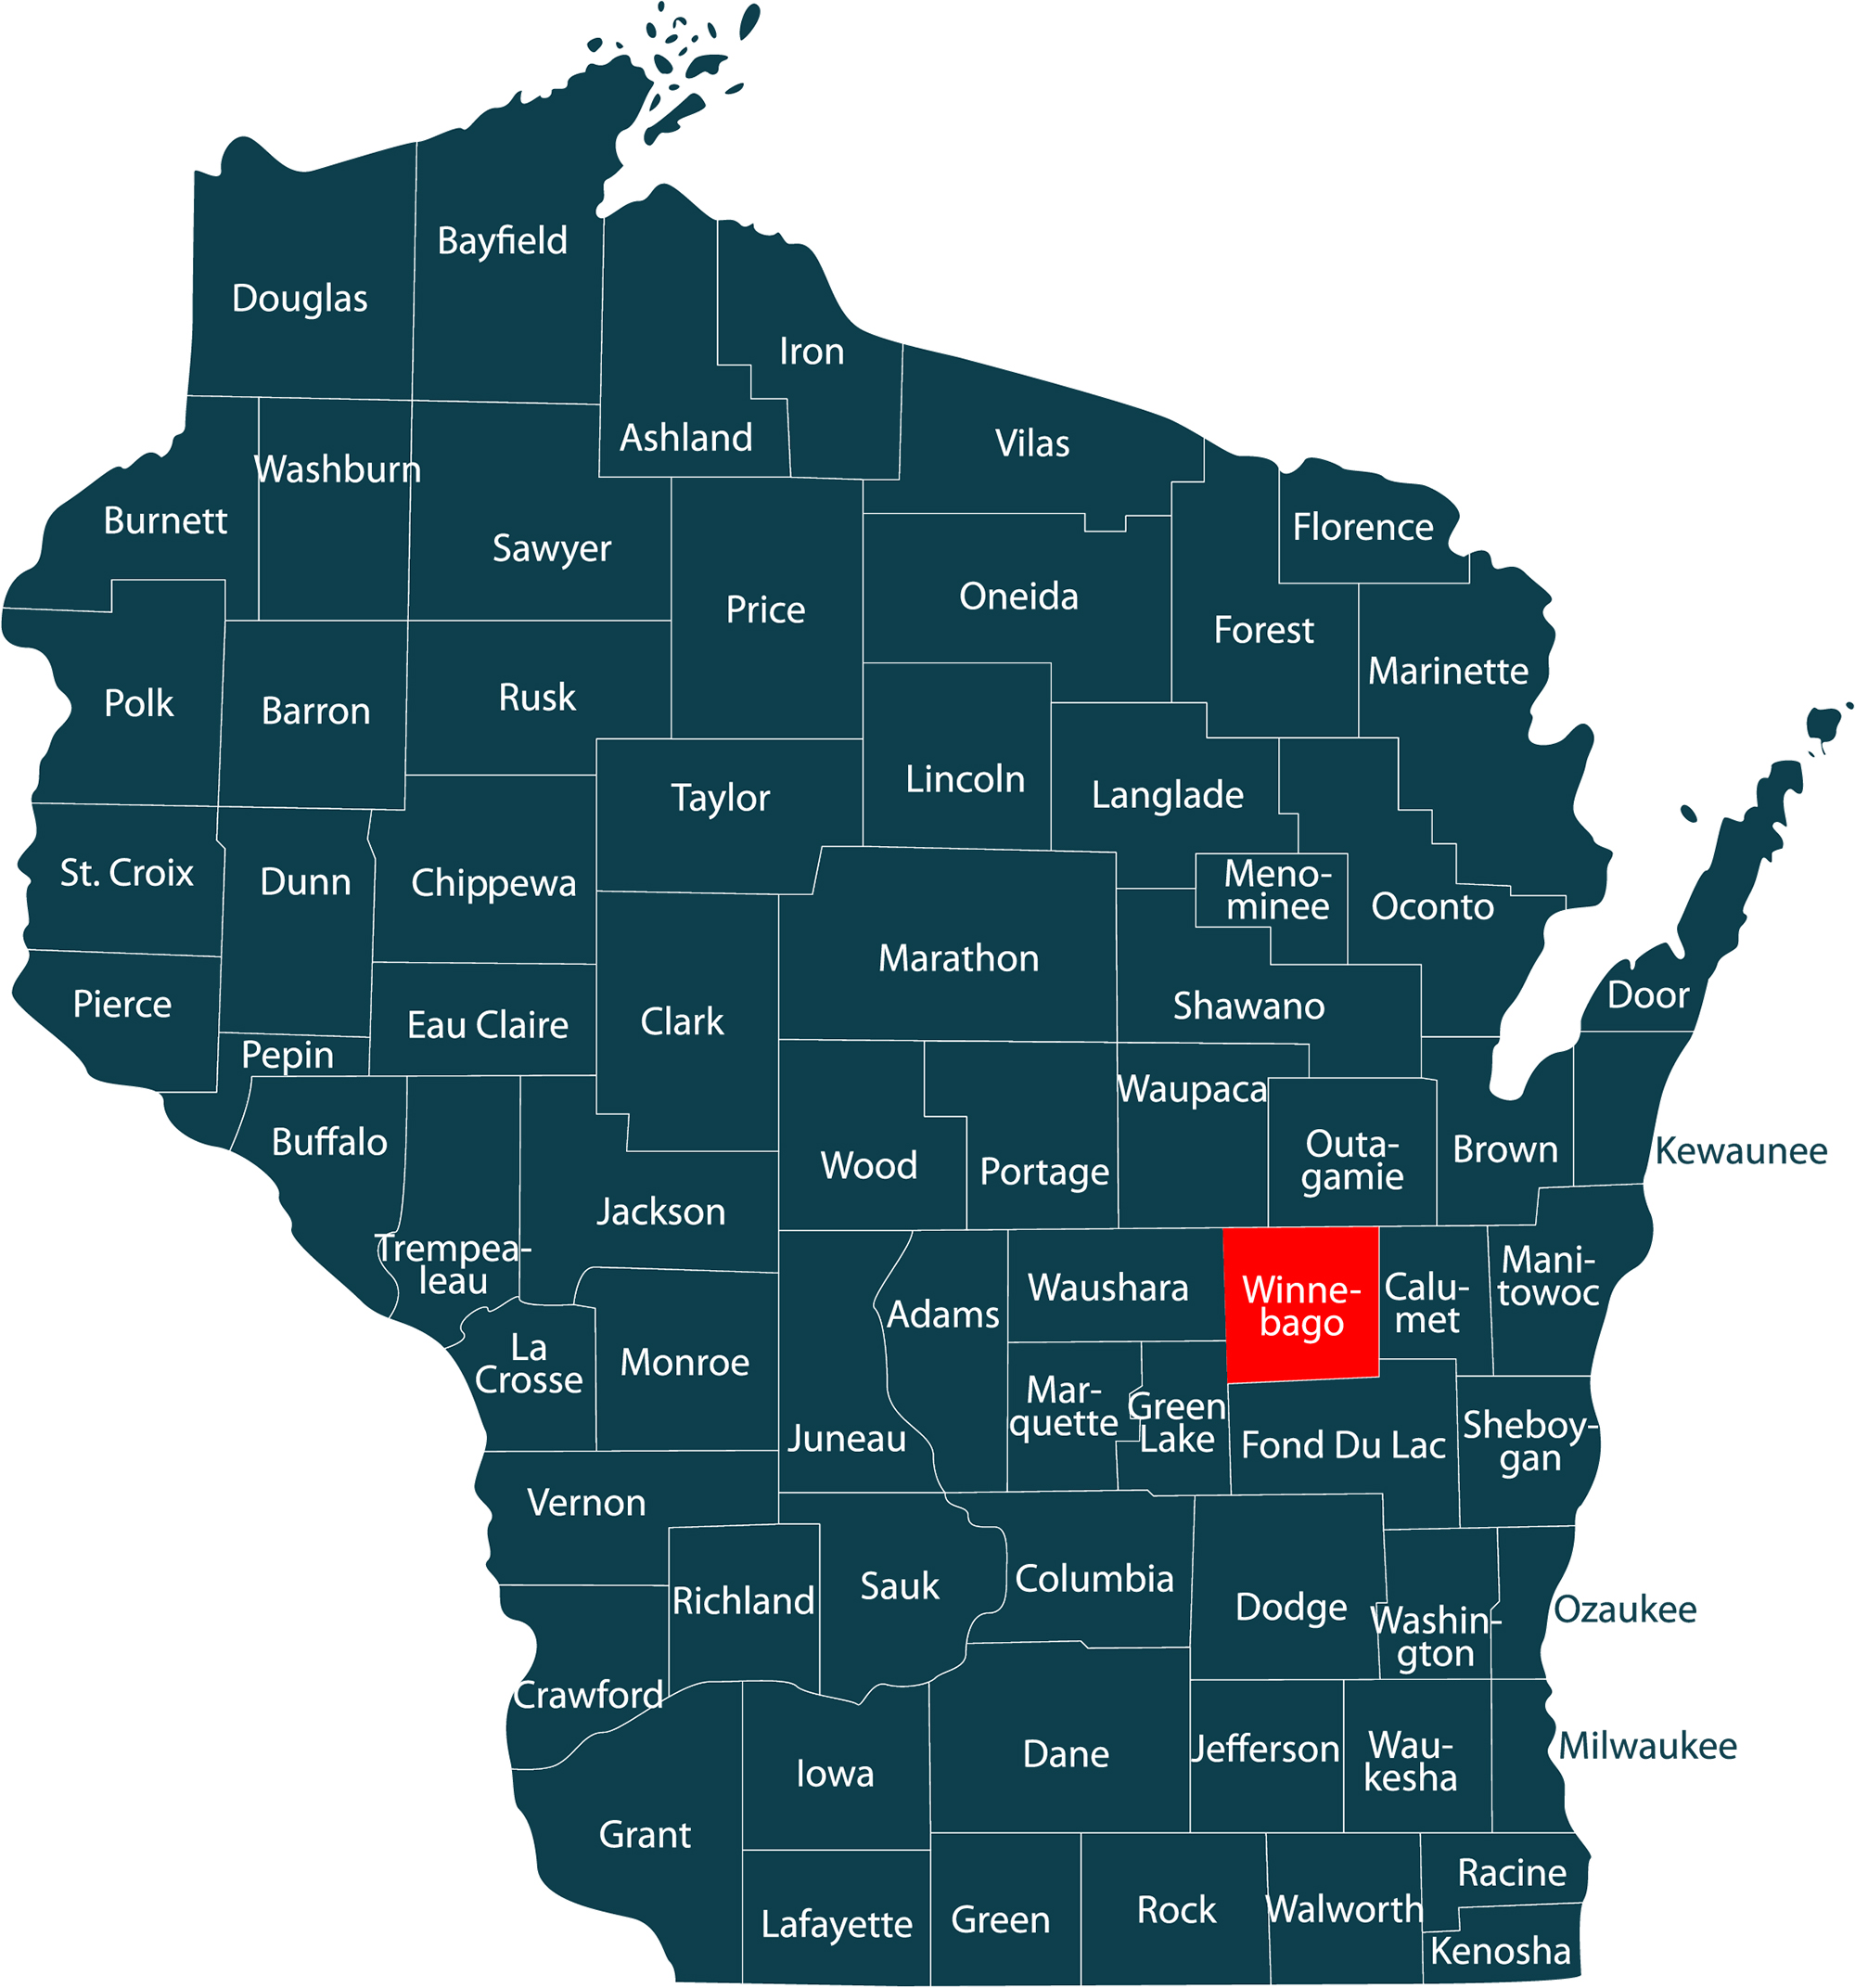 Winnebago County Wisconsin @ wisconsin.com